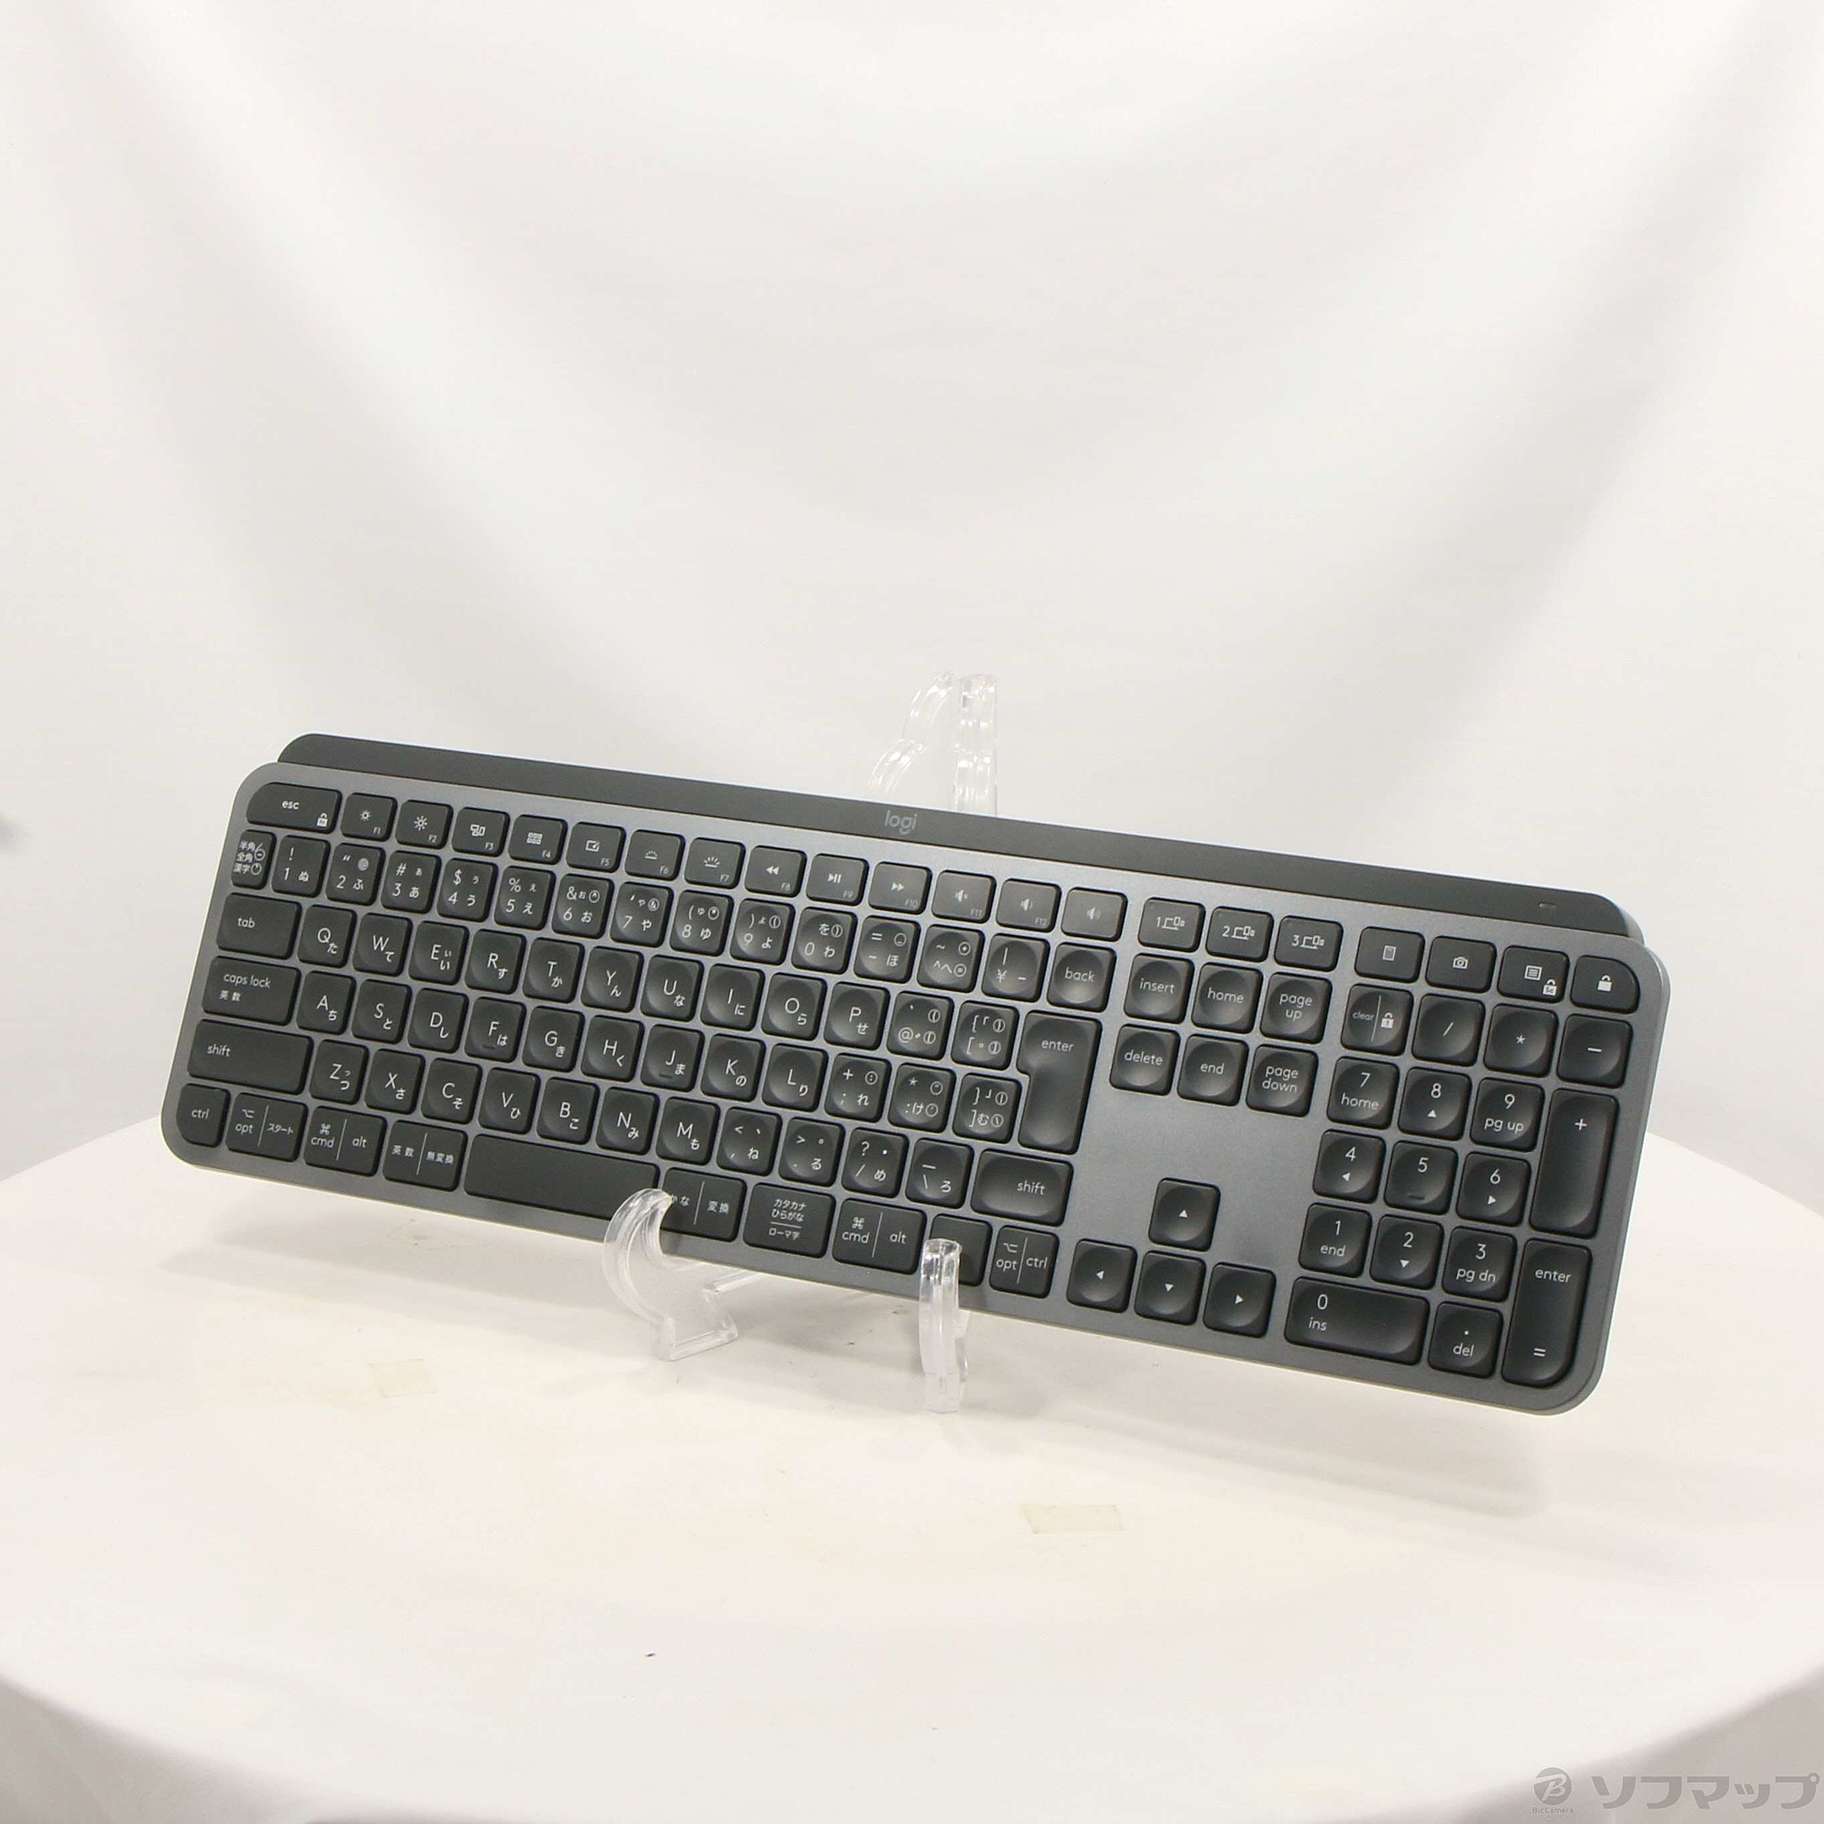 中古】MX KEYS Advanced Wireless Illuminated Keyboard KX800 ...